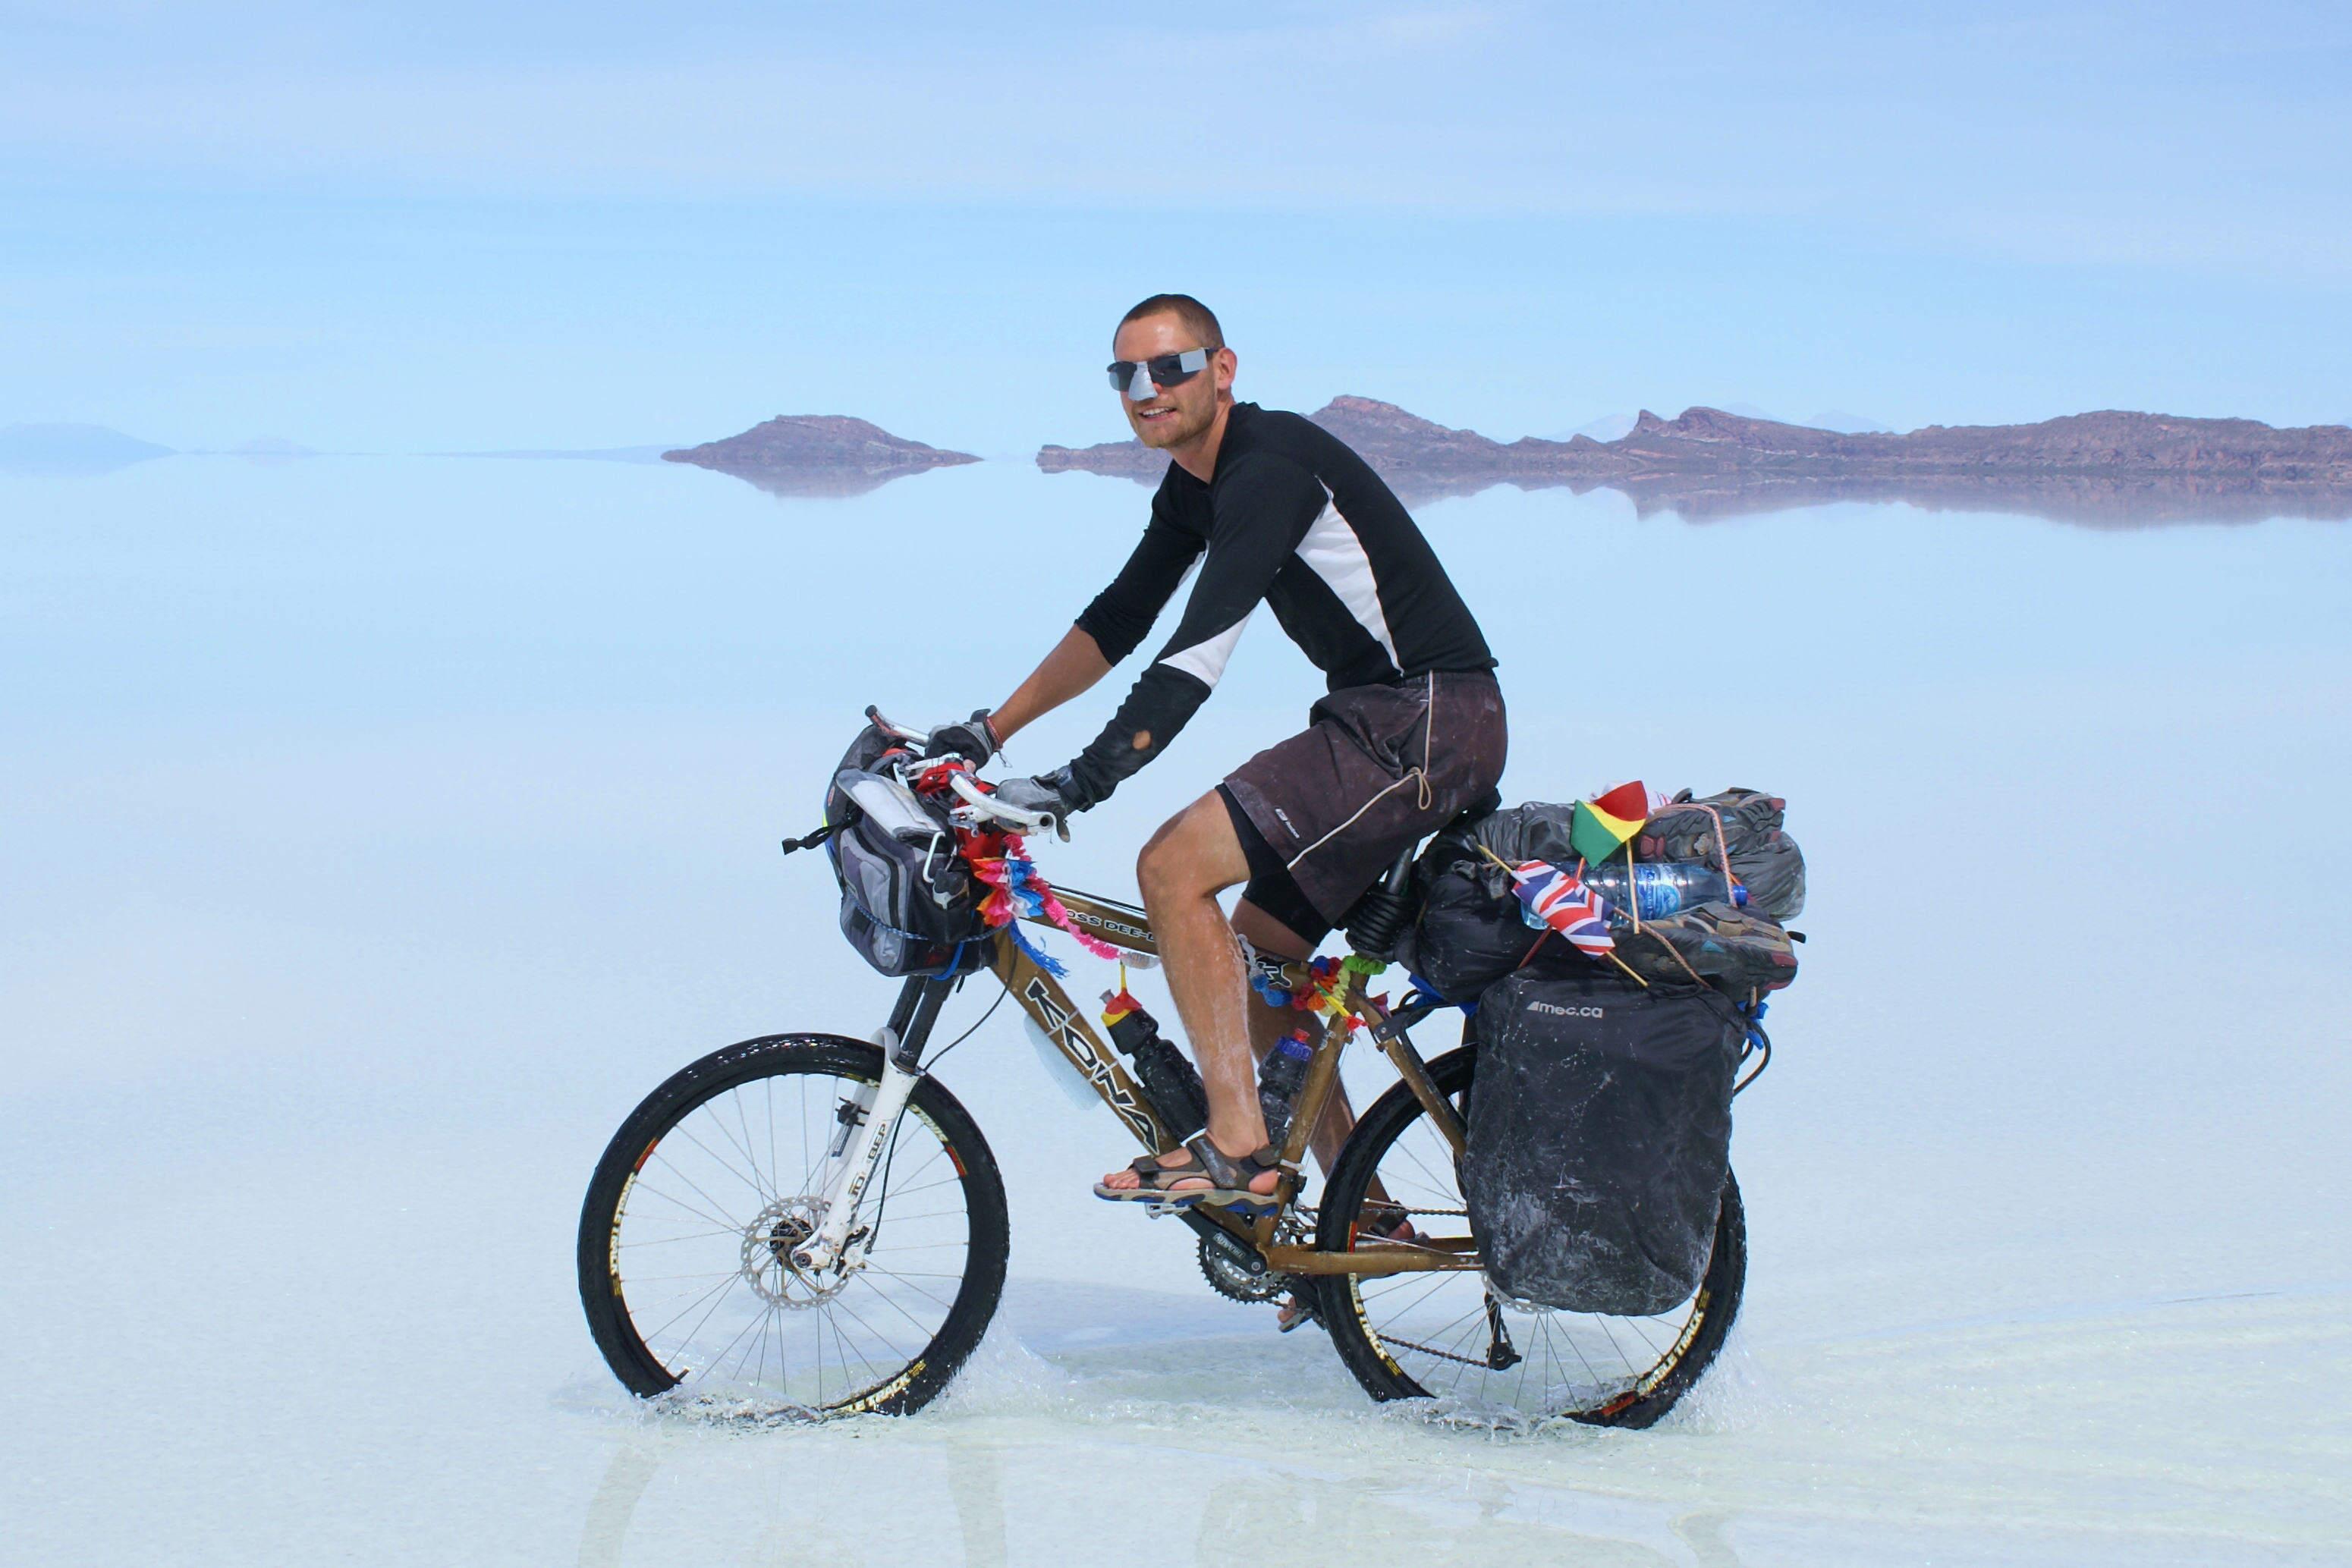 Chris cycling across the Uyuni salt flats in Bolivia